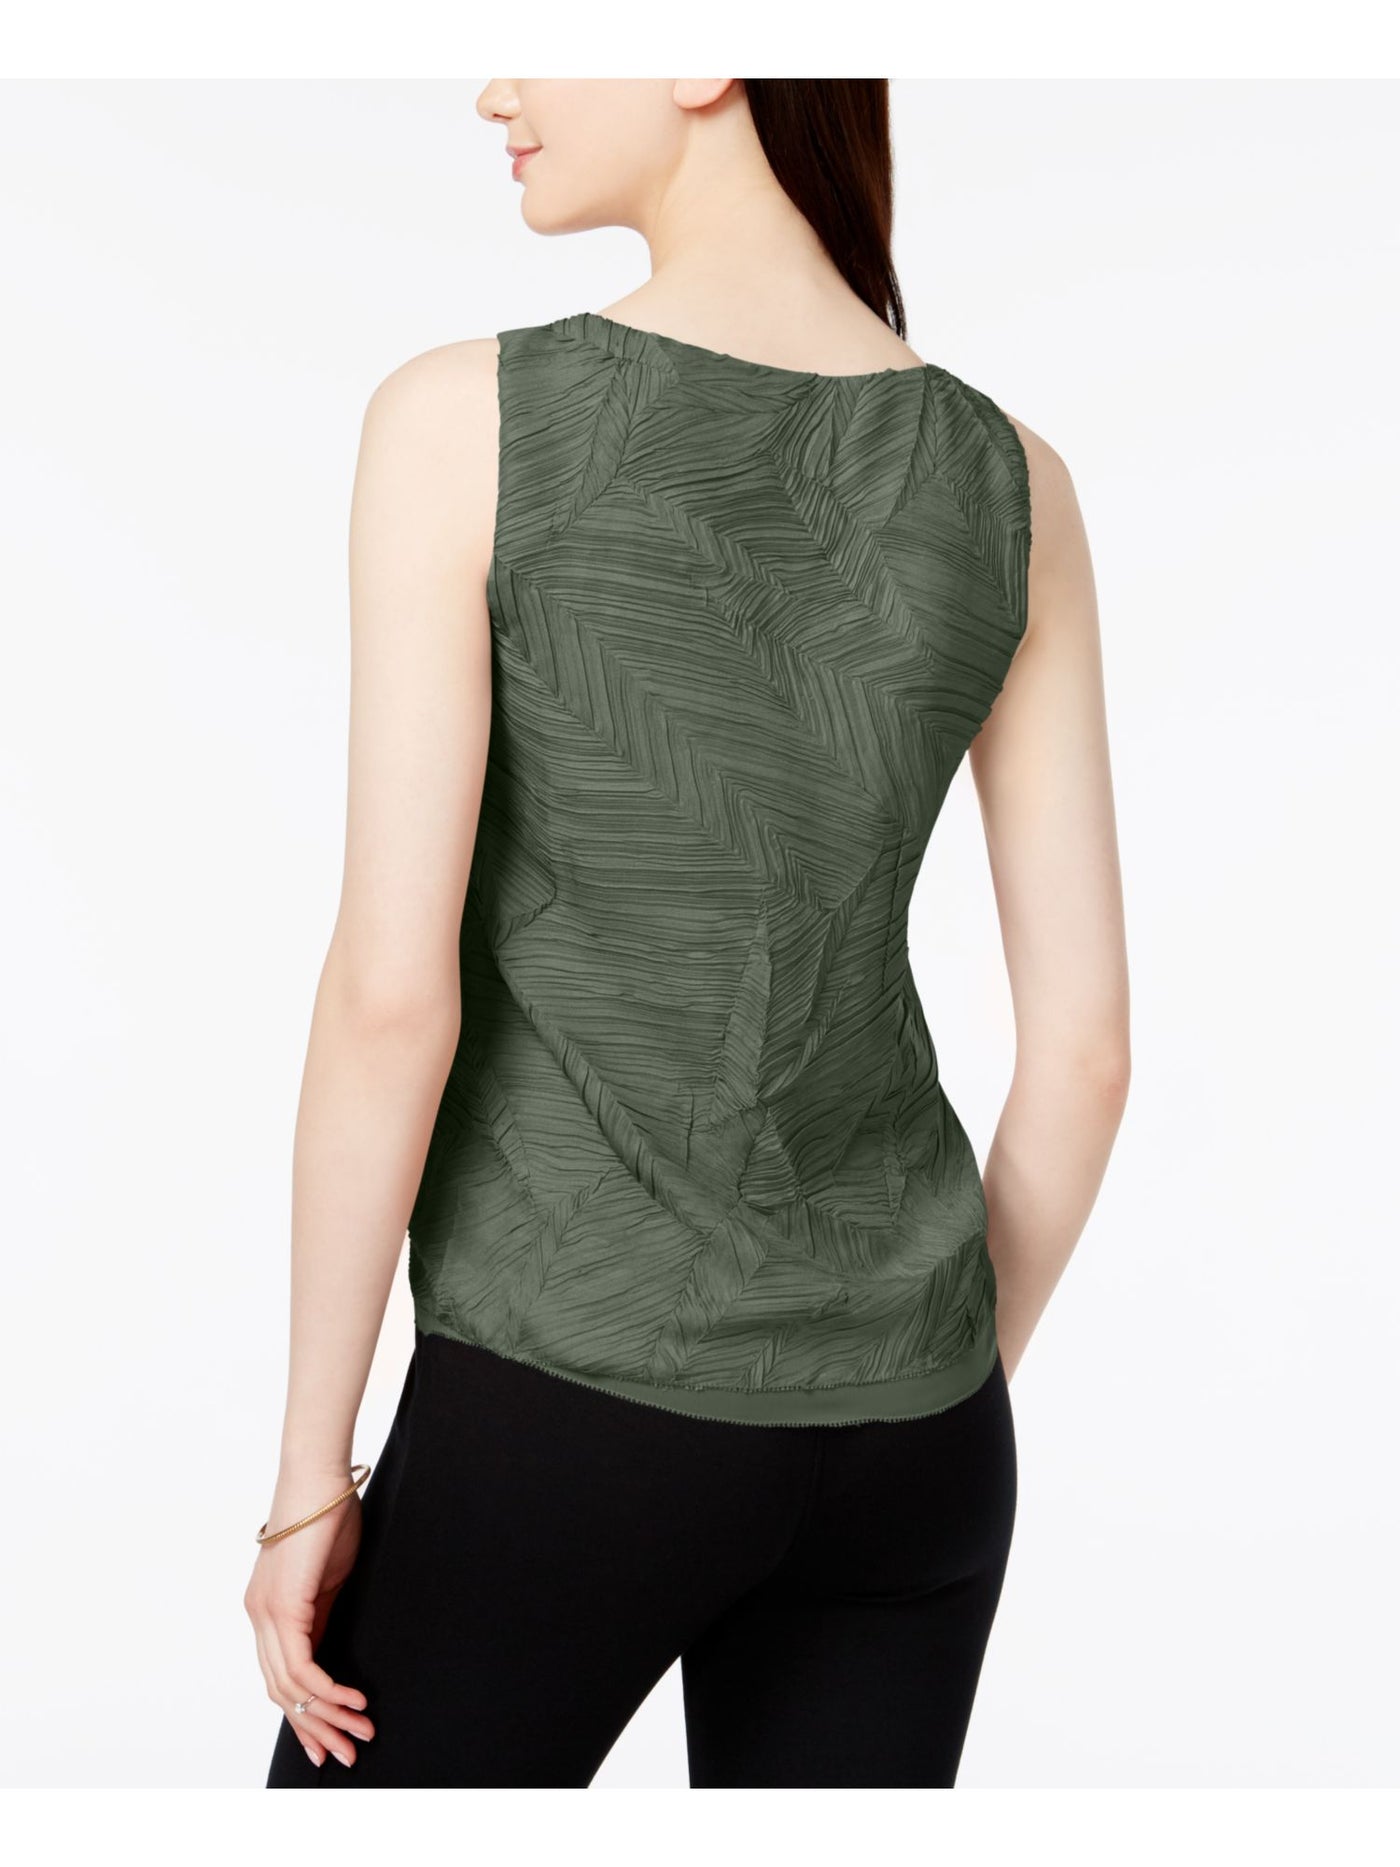 BAR III Womens Green Pleated Sleeveless V Neck Top Size: XXS